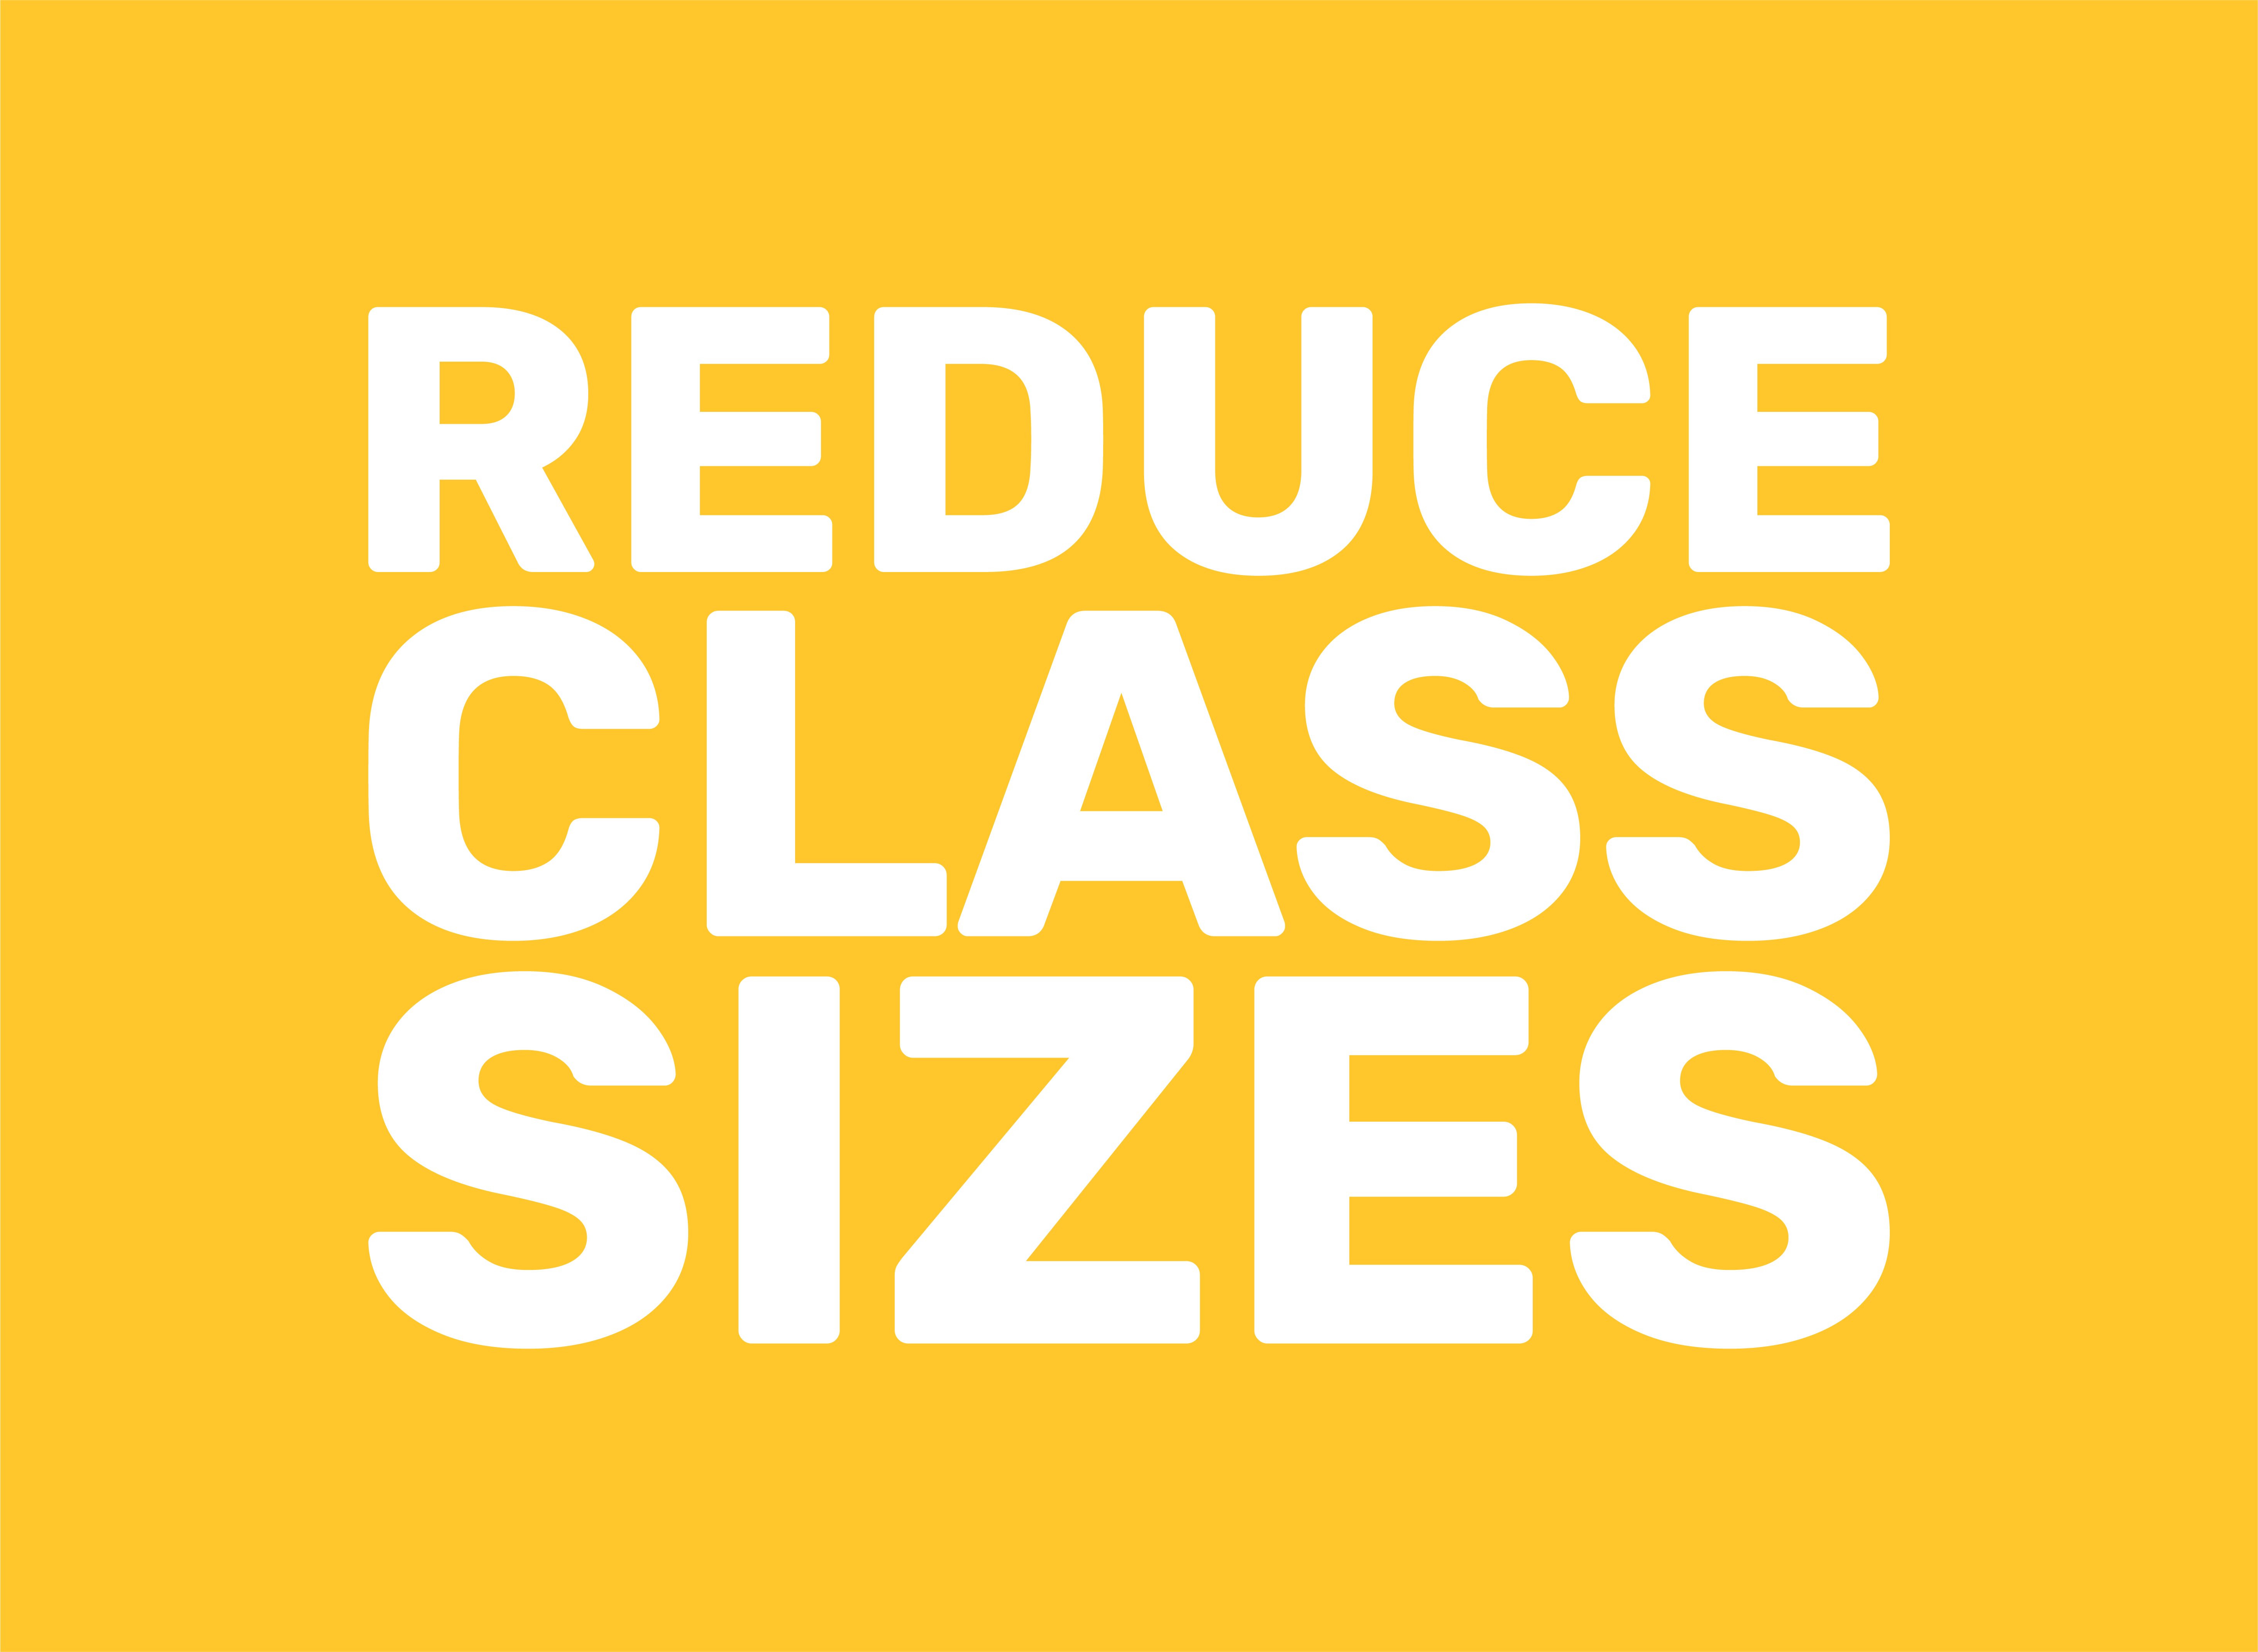 Reduce Class Sizes